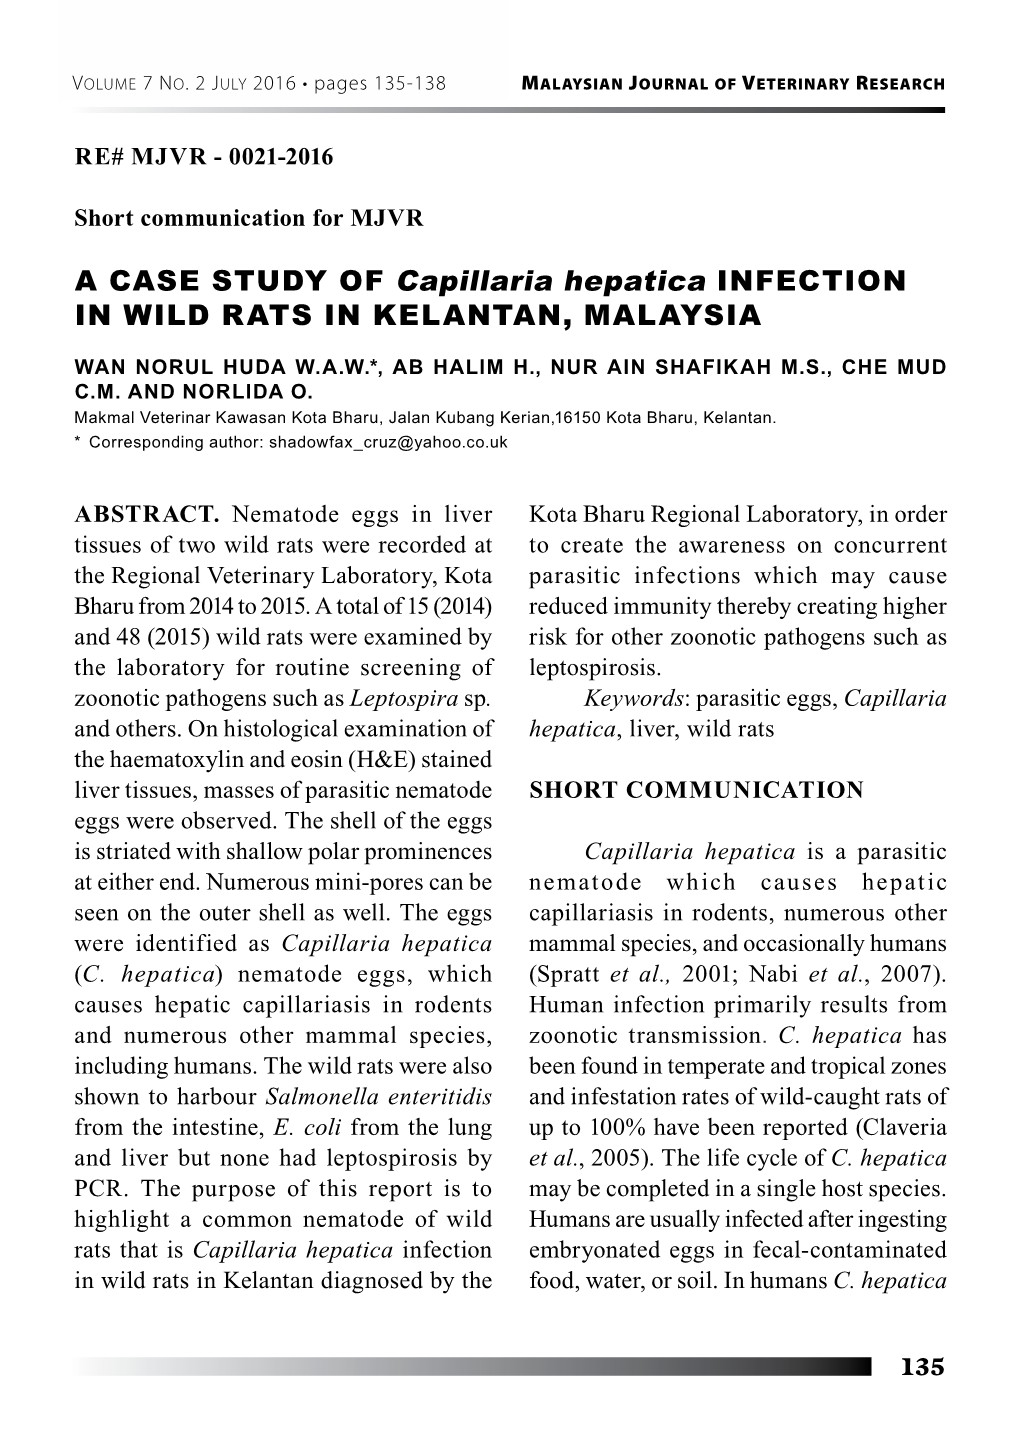 A CASE STUDY of Capillaria Hepatica INFECTION in WILD RATS in KELANTAN, MALAYSIA